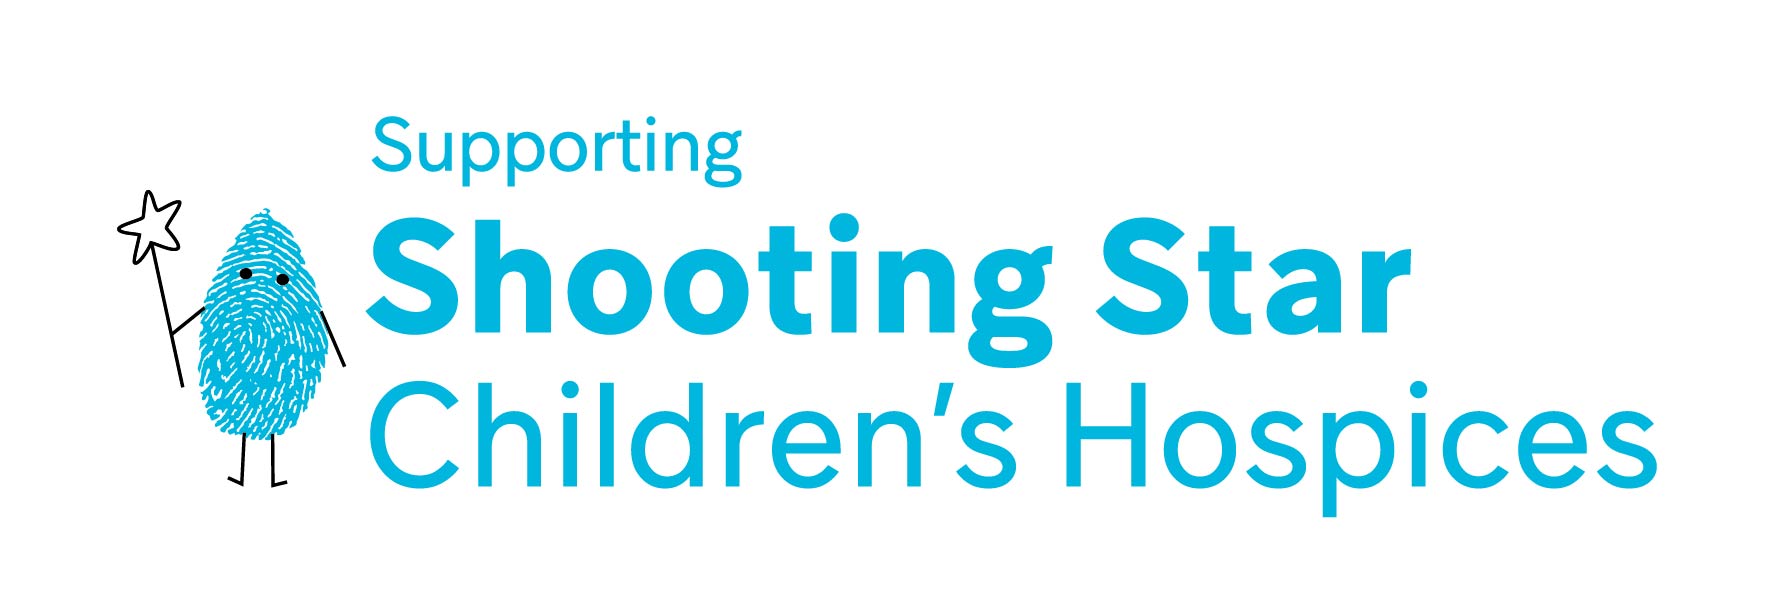 Shooting Star Children's Hospices logo